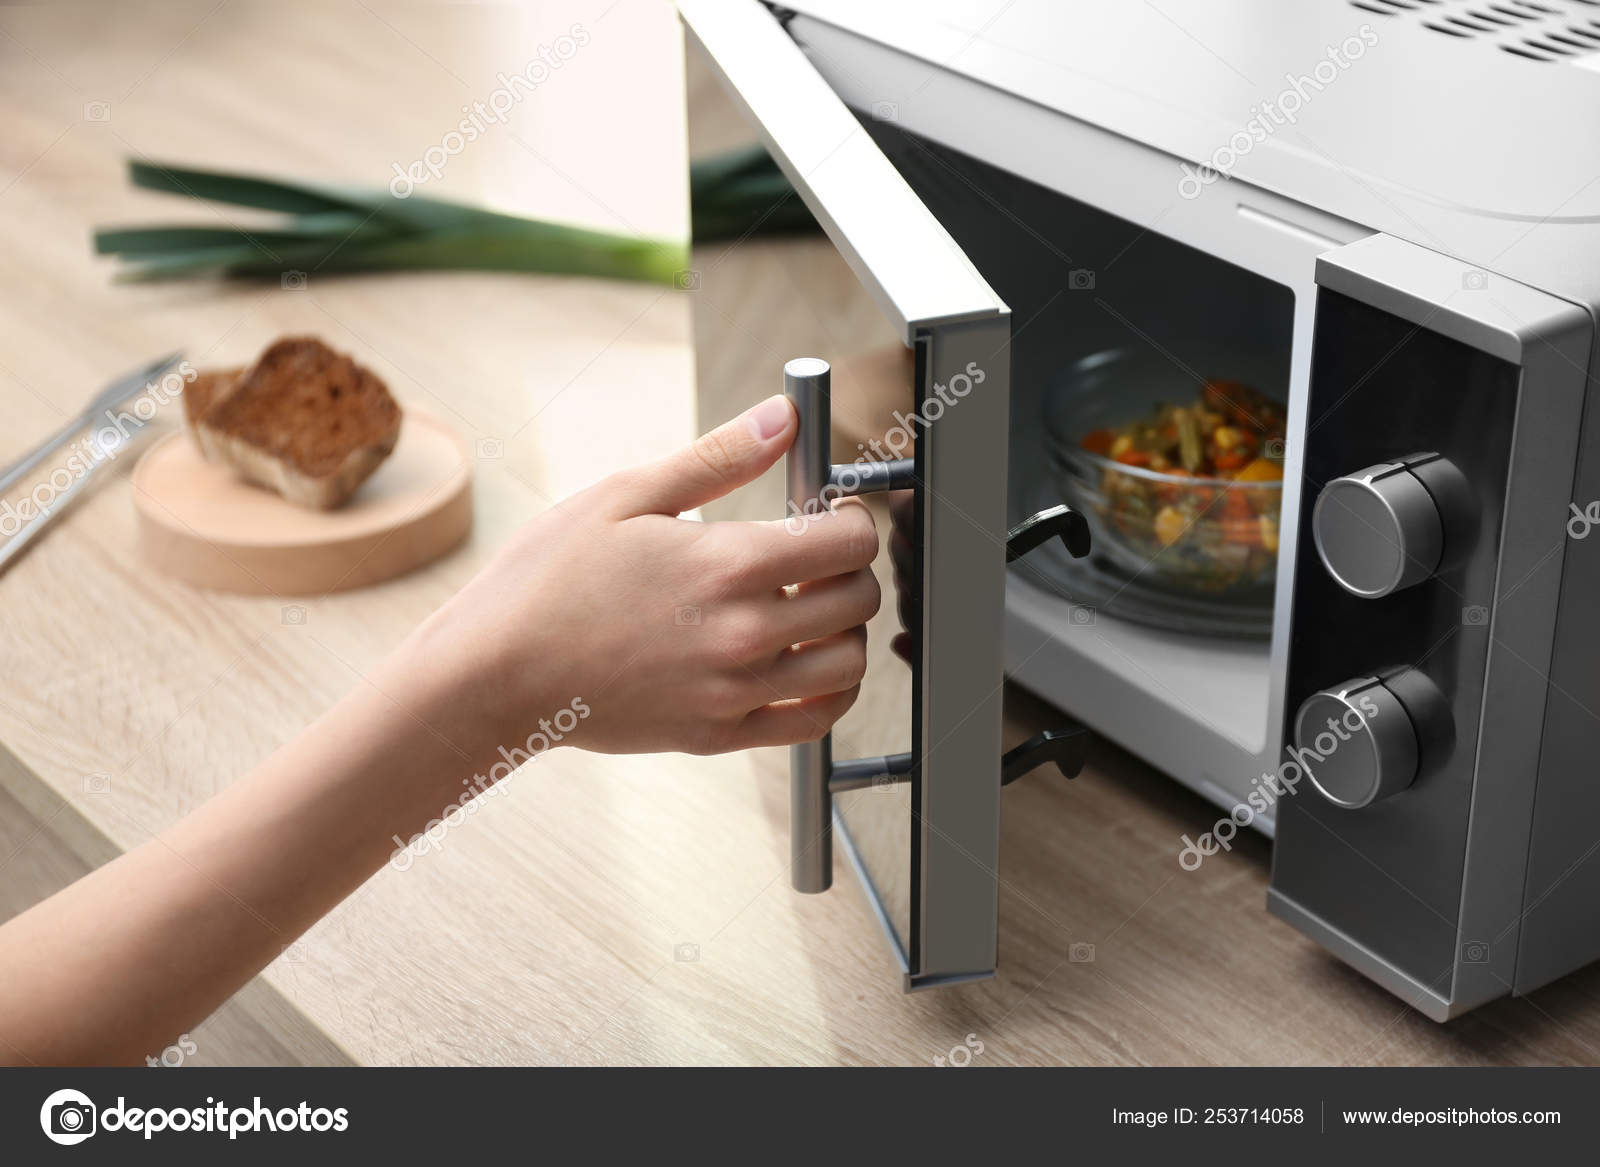 https://st4.depositphotos.com/16122460/25371/i/1600/depositphotos_253714058-stock-photo-young-woman-using-microwave-oven.jpg